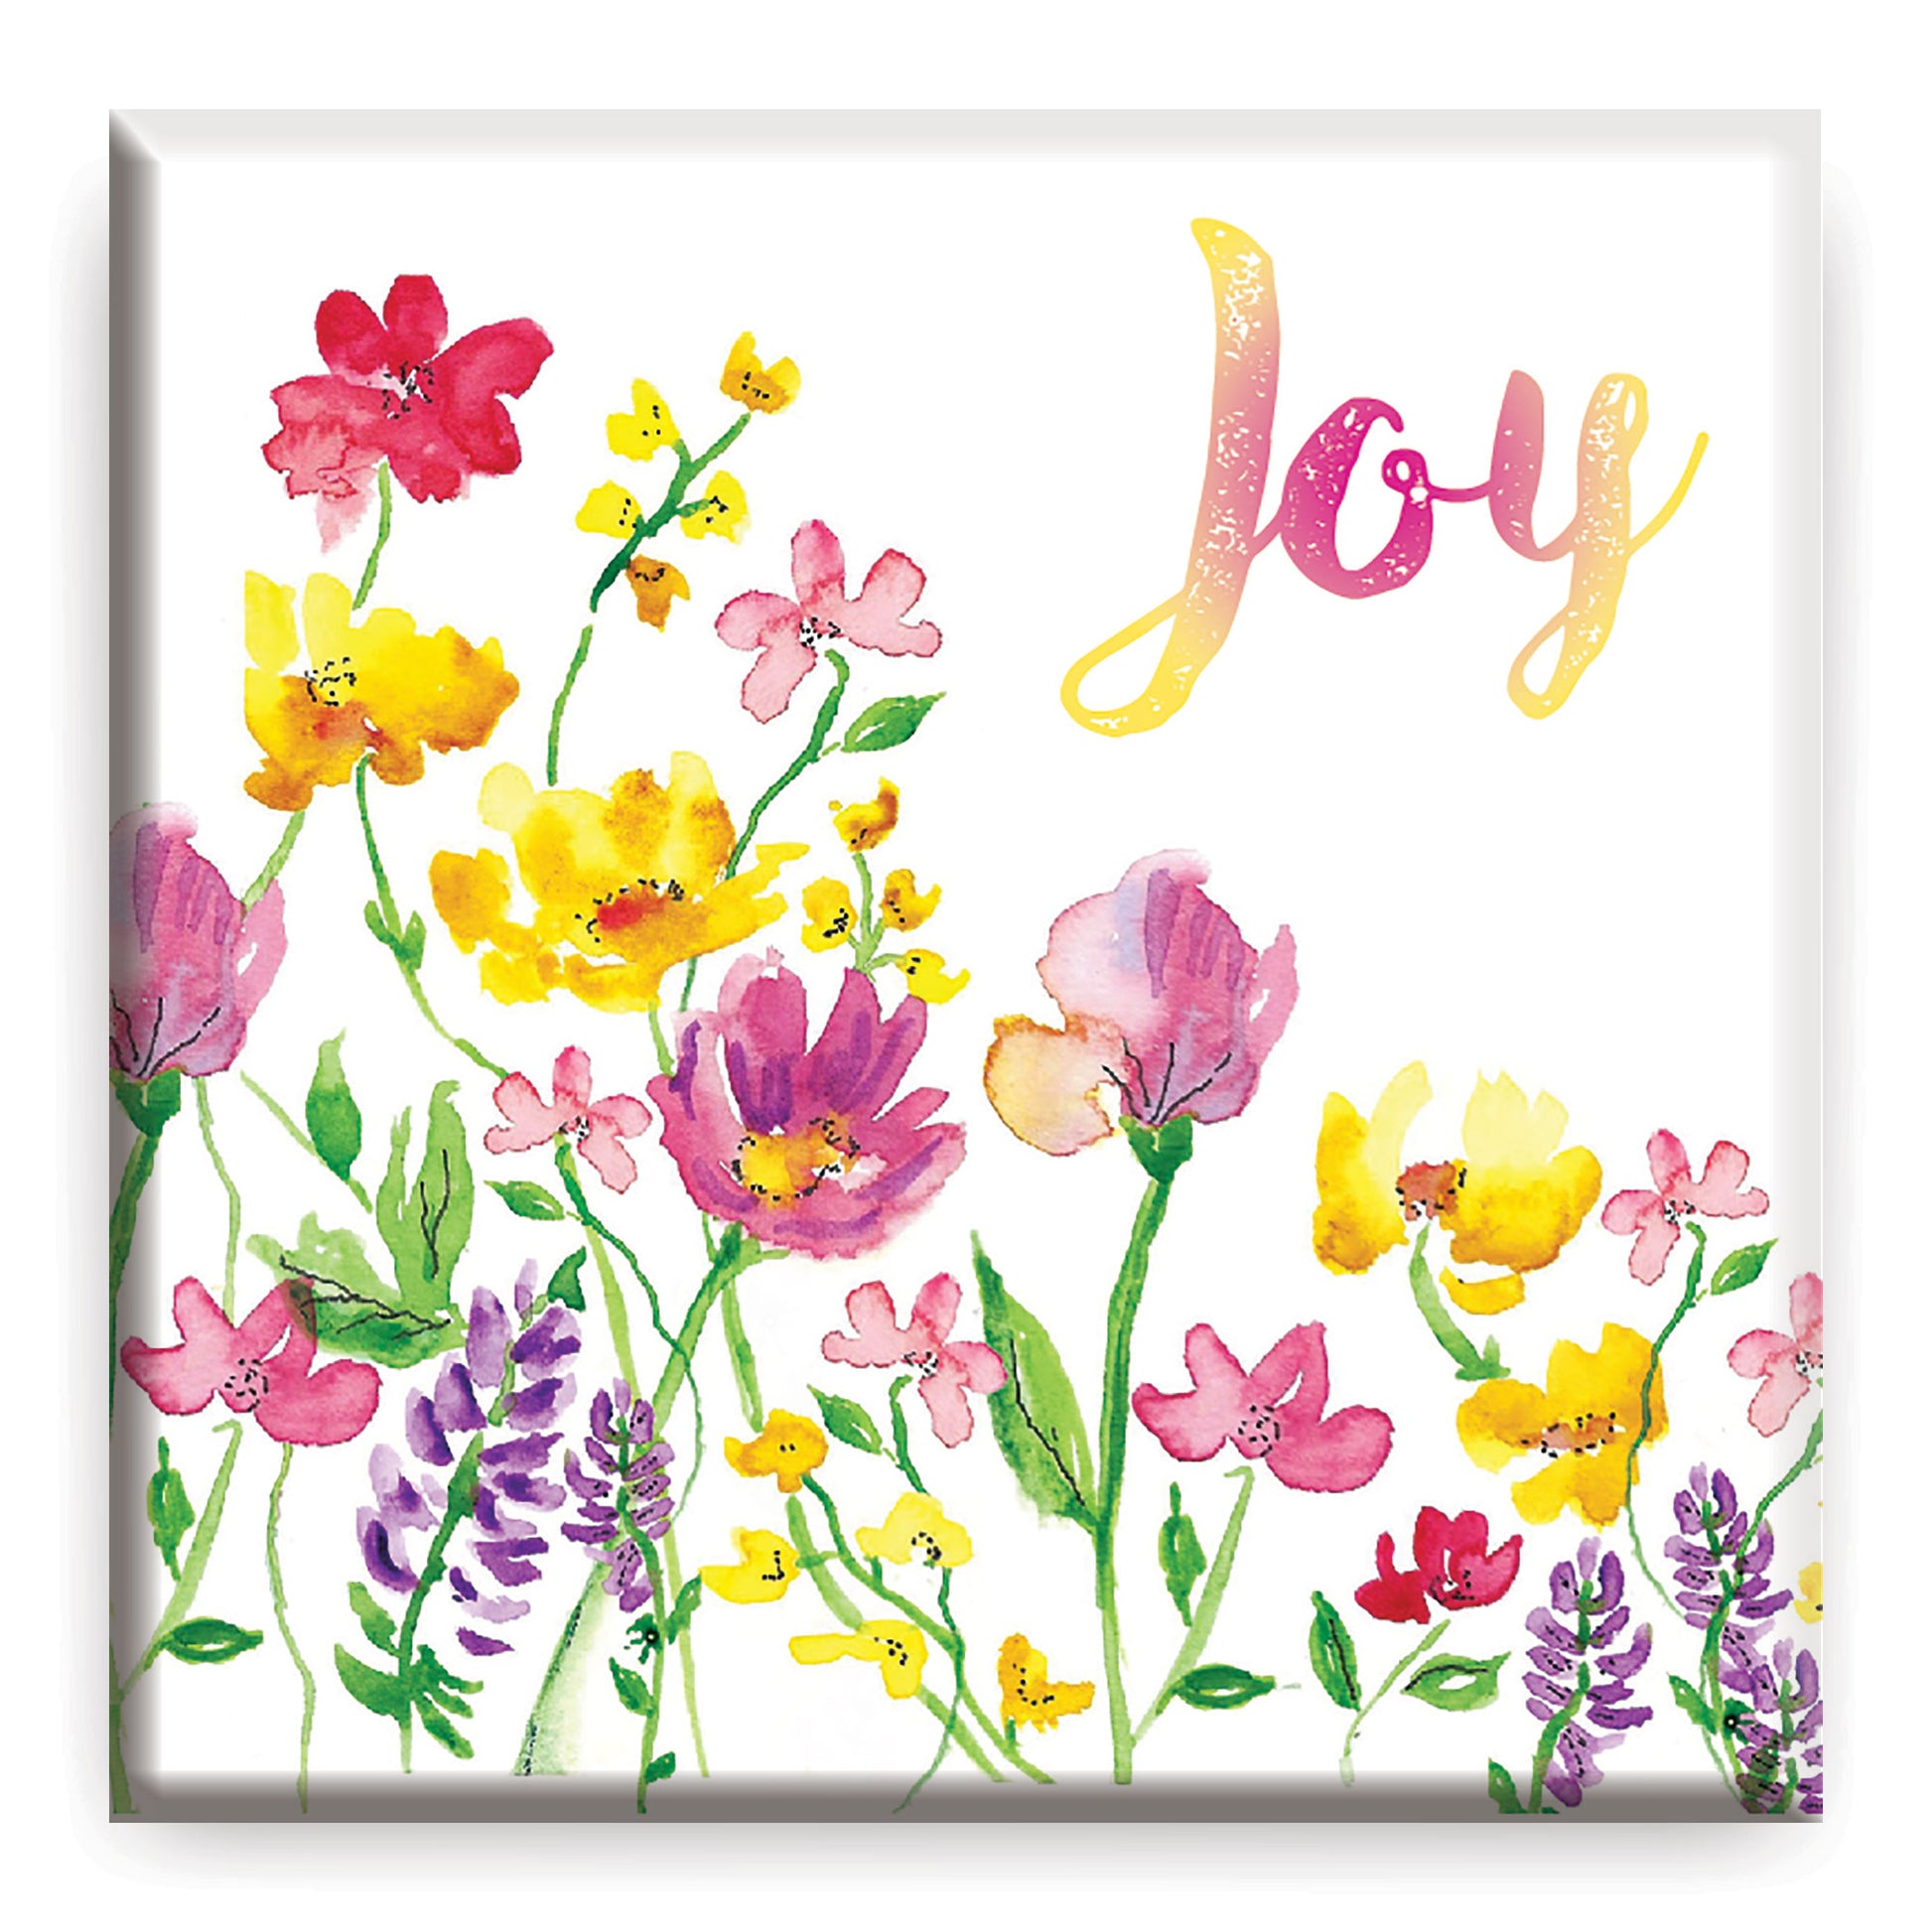 Joy Magnet - The Christian Gift Company